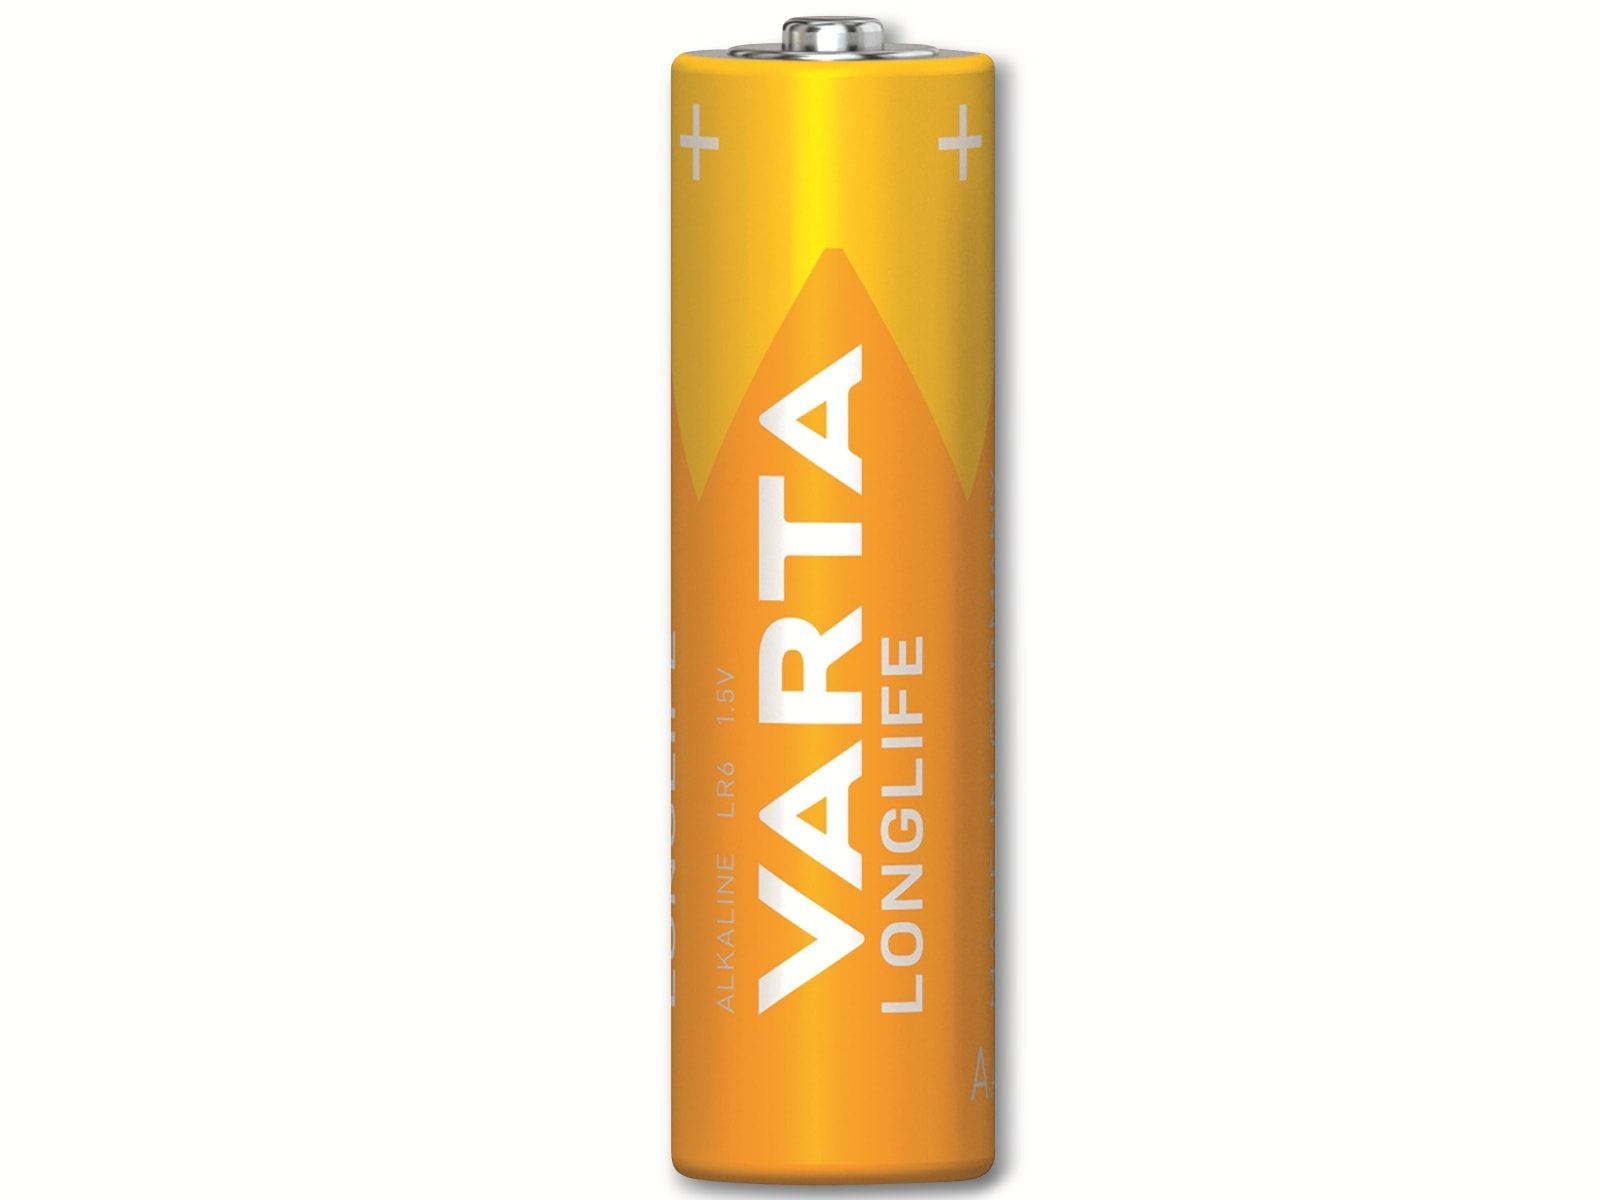 Alkaline VARTA Mignon, Longlife, 8 Stück Batterie LR06, 1.5V, Batterie AA, Alkaline,